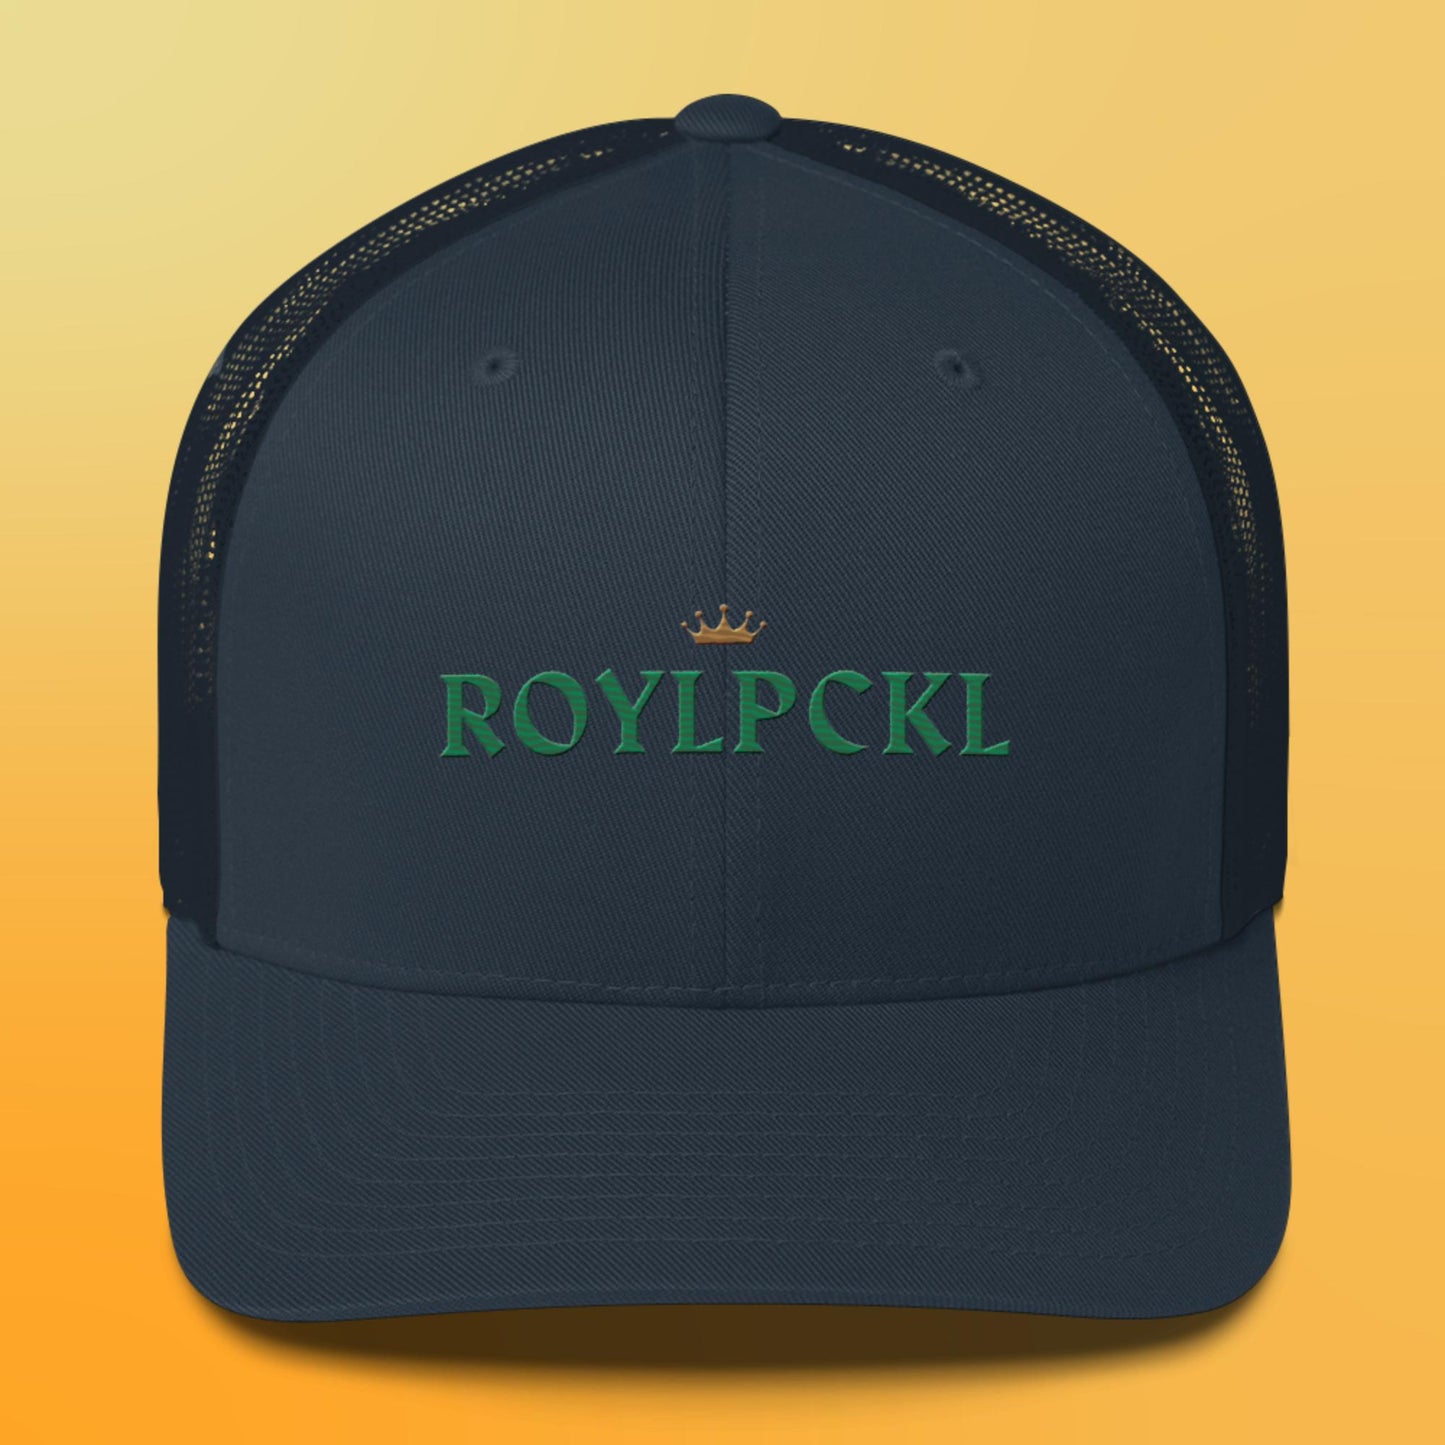 RoylPckl Crowned Trucker